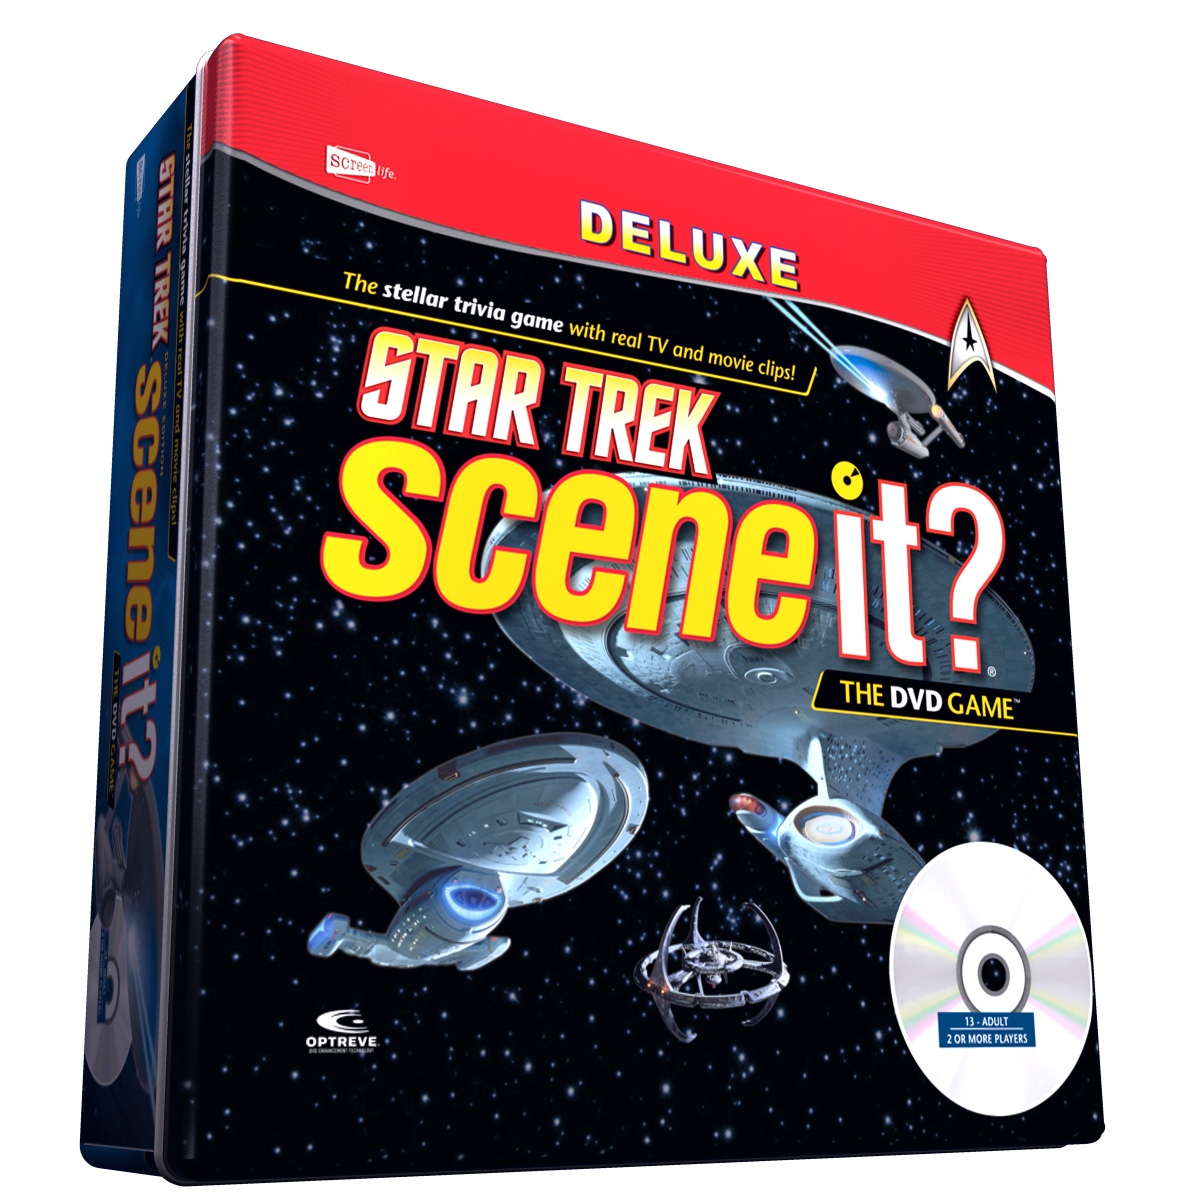 Review – Star Trek SceneIt? DVD Trivia Game – TrekMovie.com